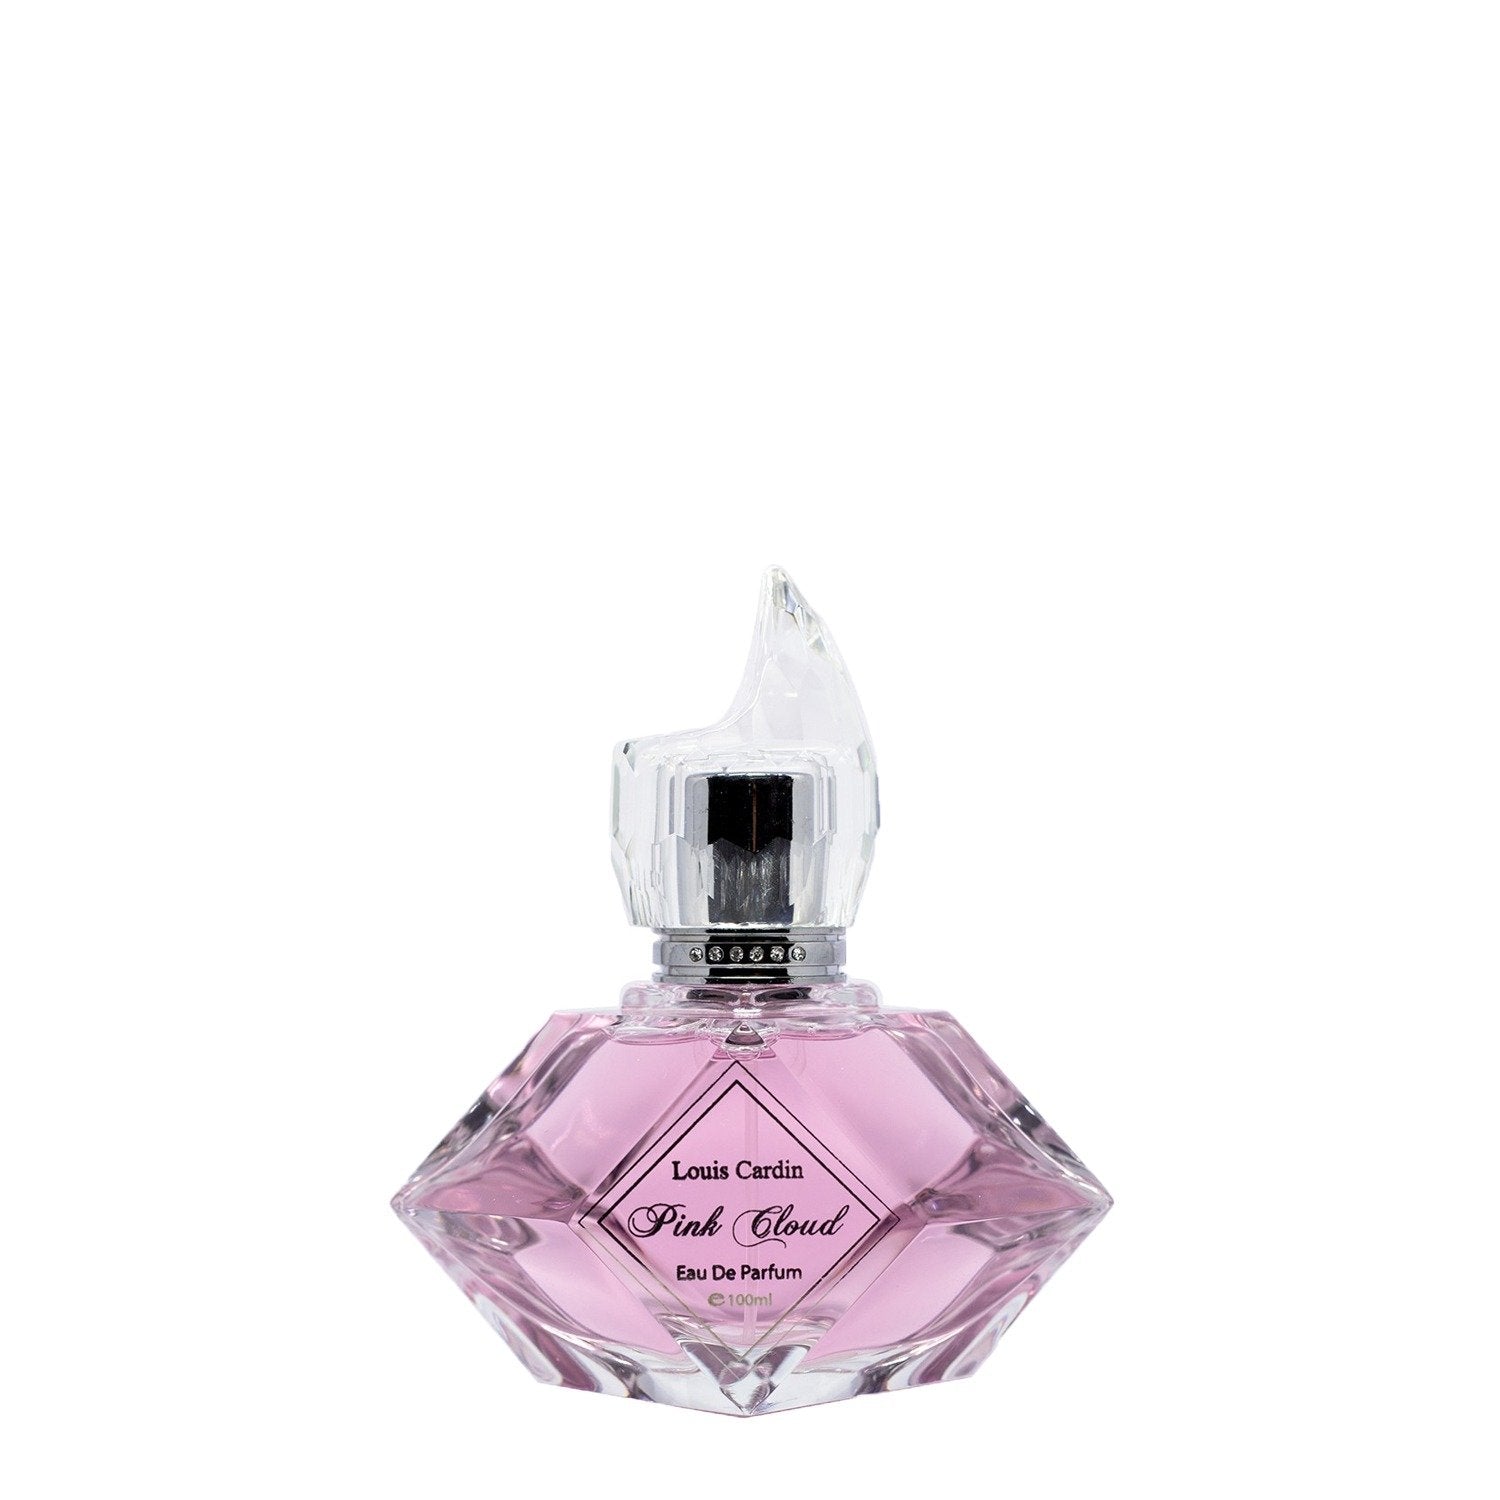 Louis Cardin Pink Cloud - Best men and women pefume cologne scent oud collection